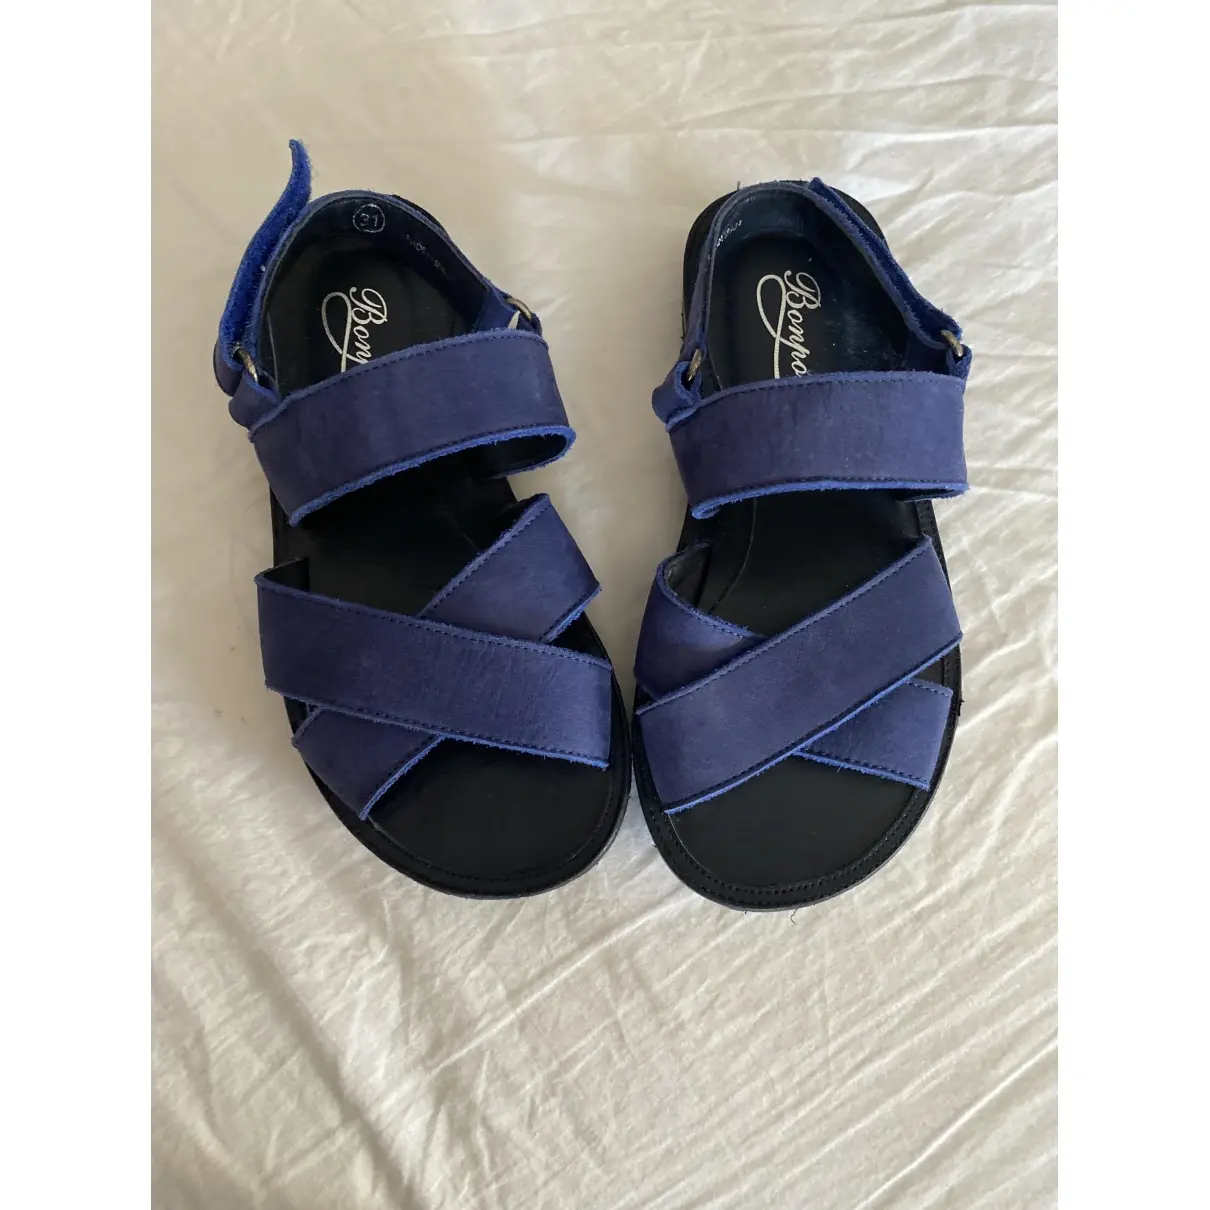 Buy Bonpoint Leather sandals online